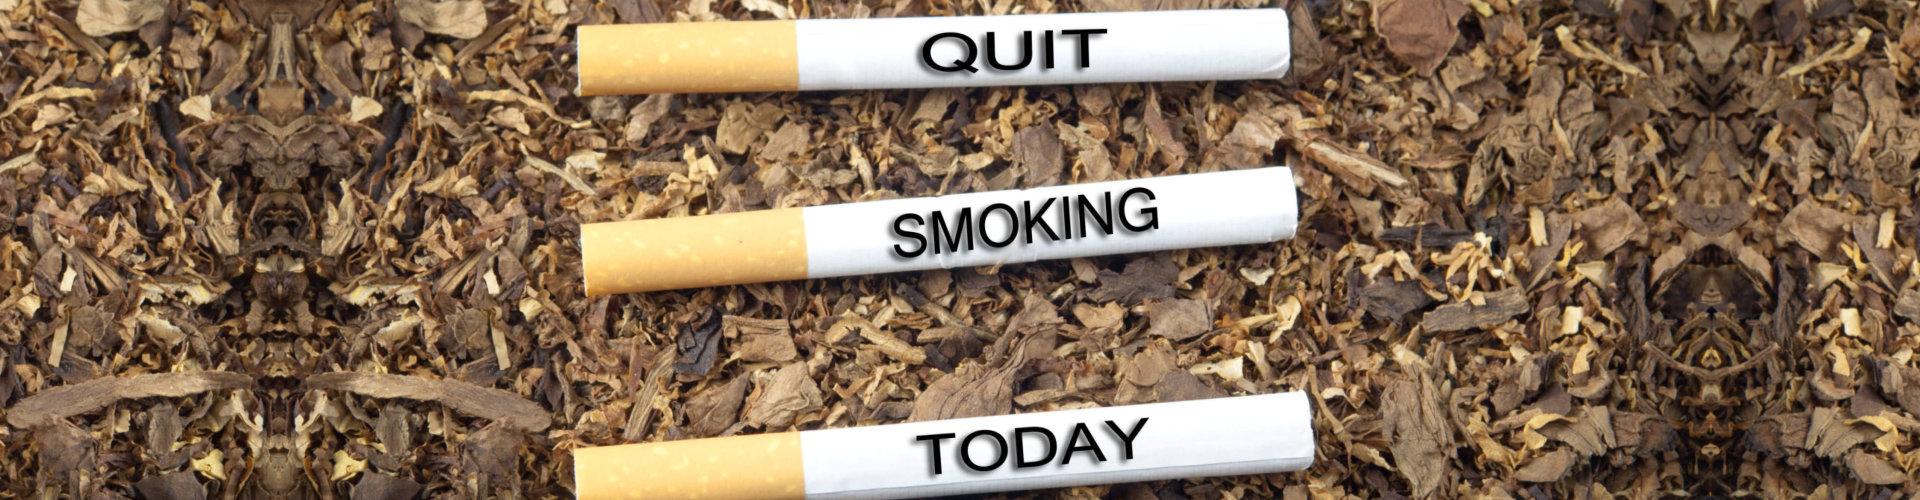 quit smoking now